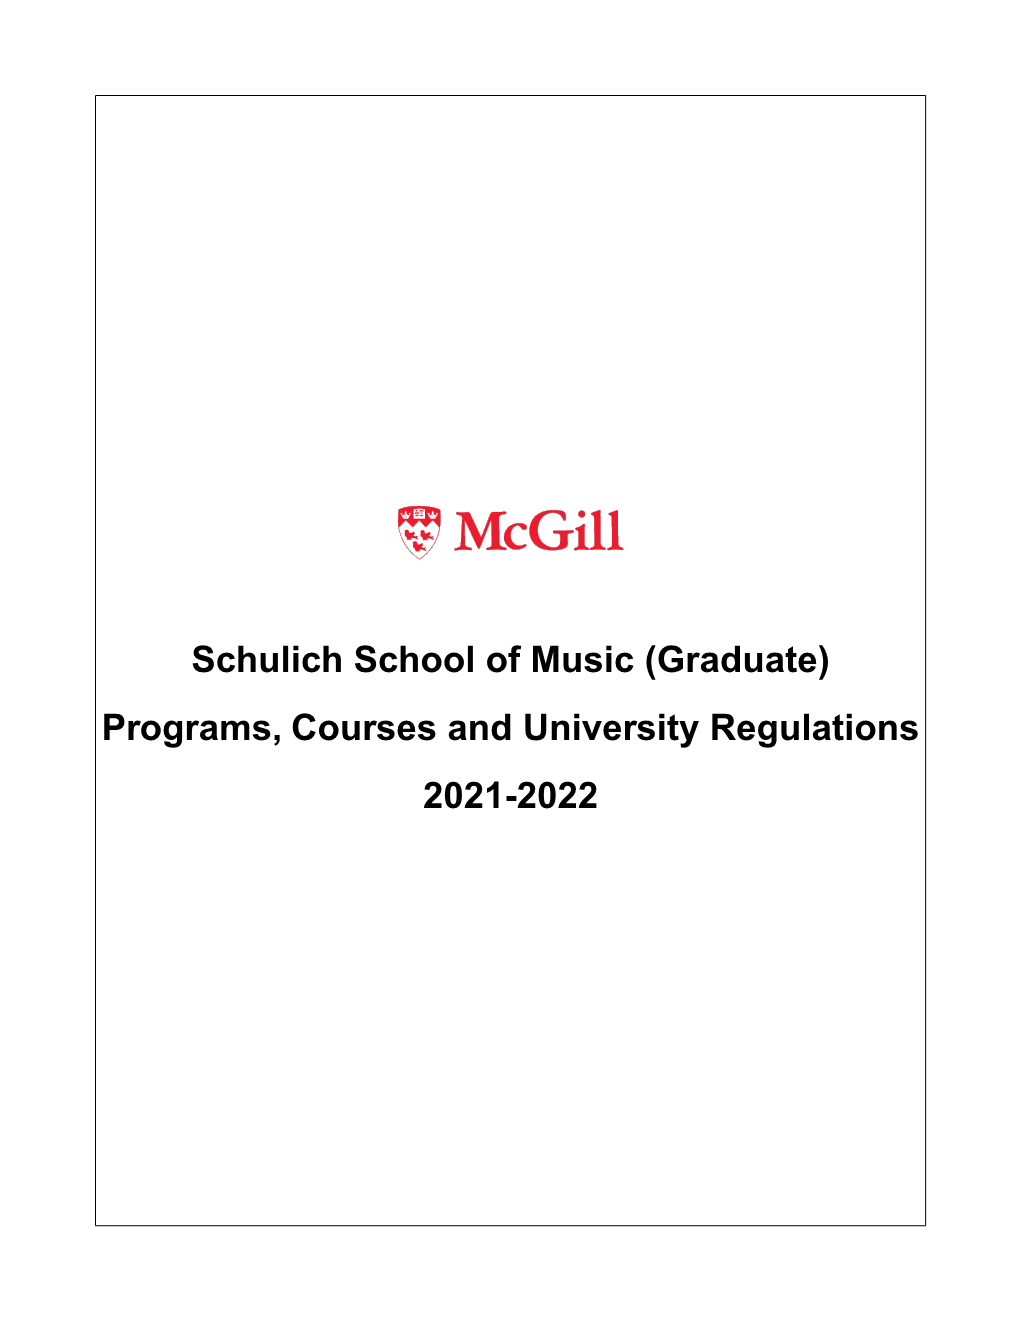 (Graduate) Programs, Courses and University Regulations 2021-2022